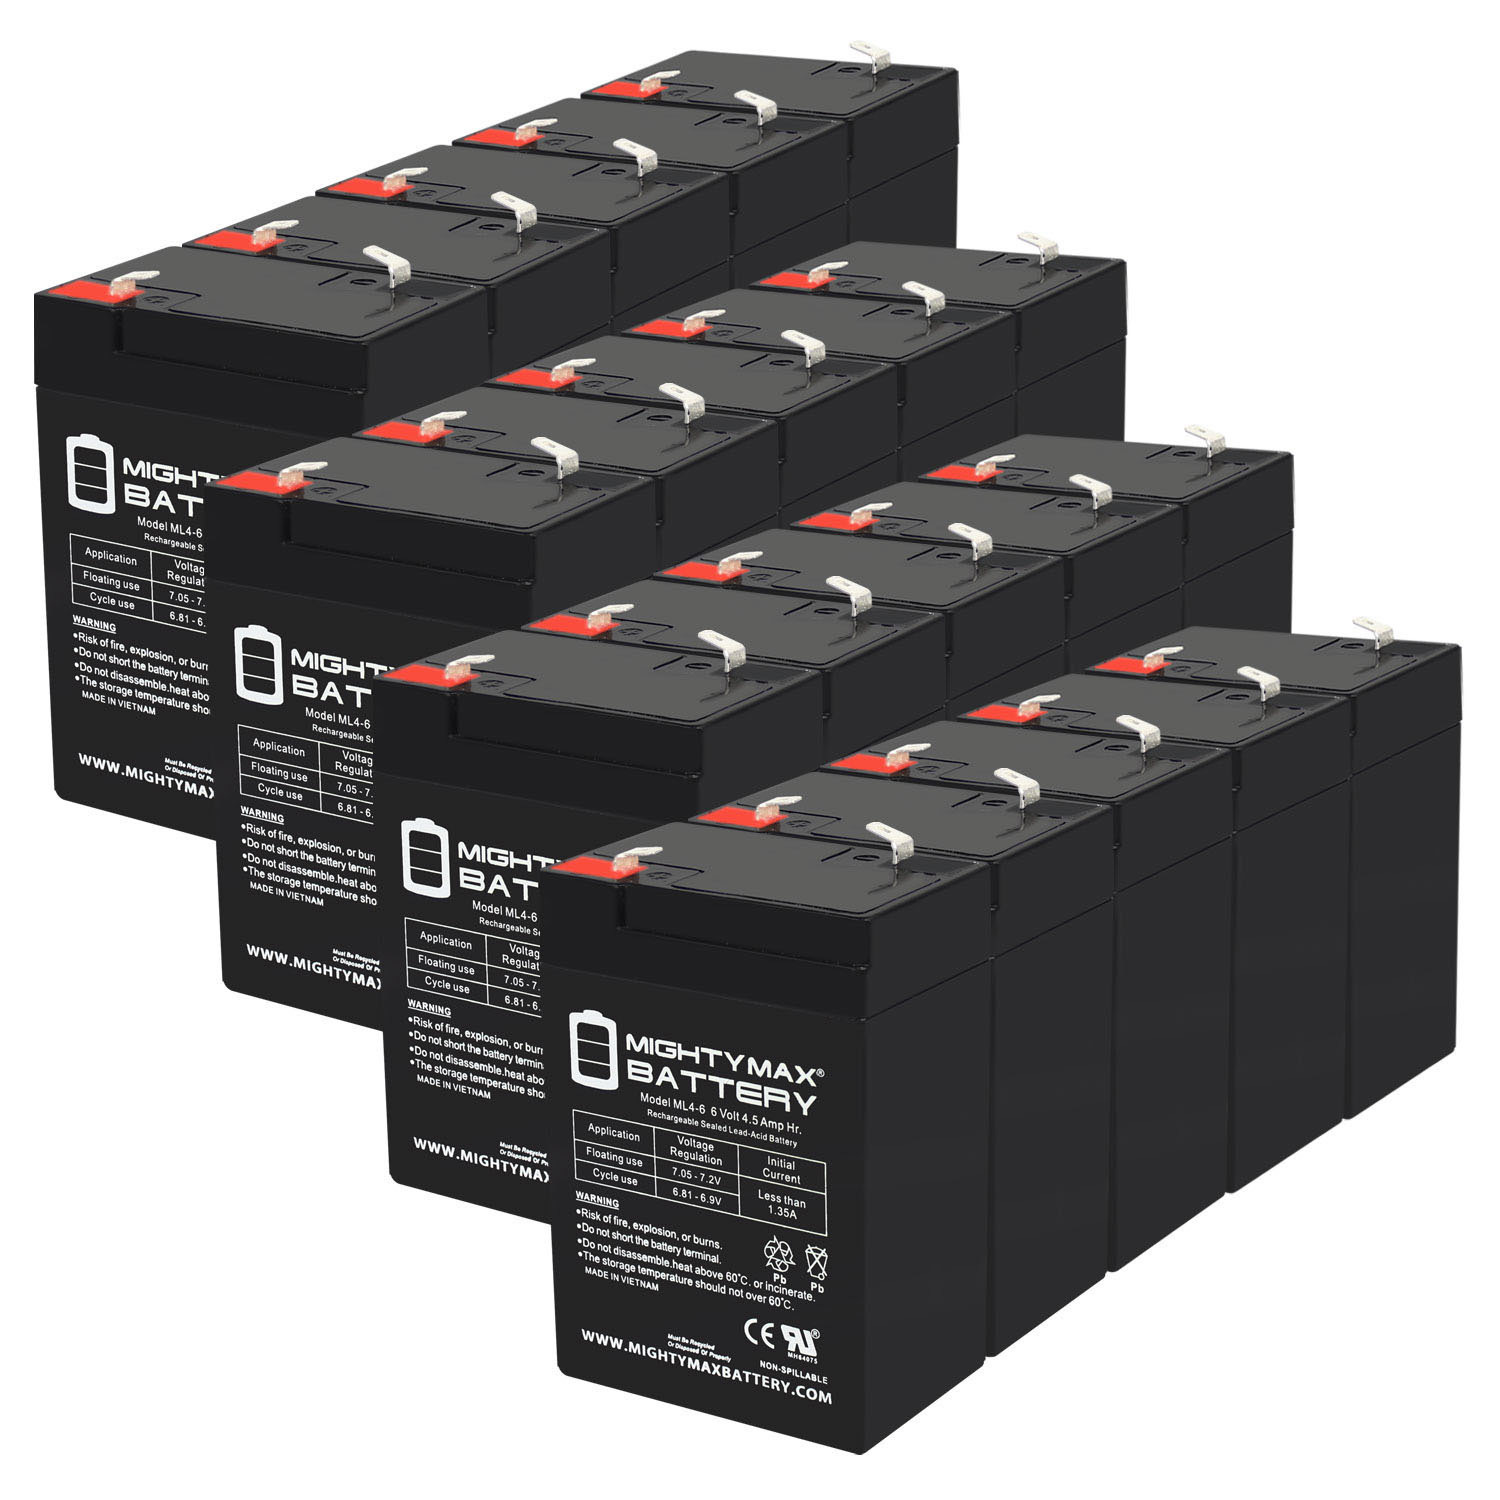 6V 4.5AH Replacement Battery for Spot Light 20 million Candlepower - 20 Pack